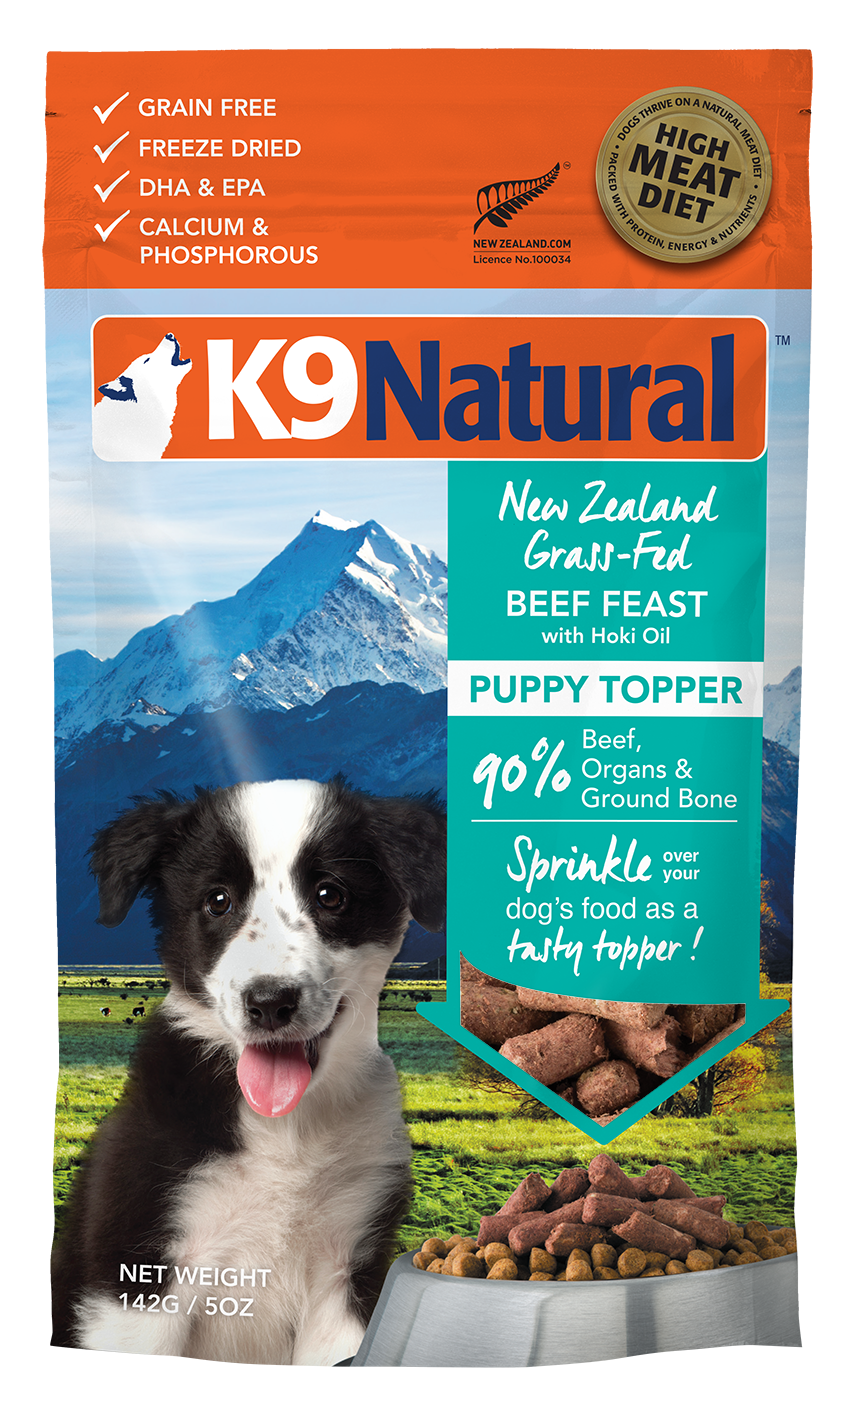 K9 Natural - Freeze Dried Dog Food/Topper